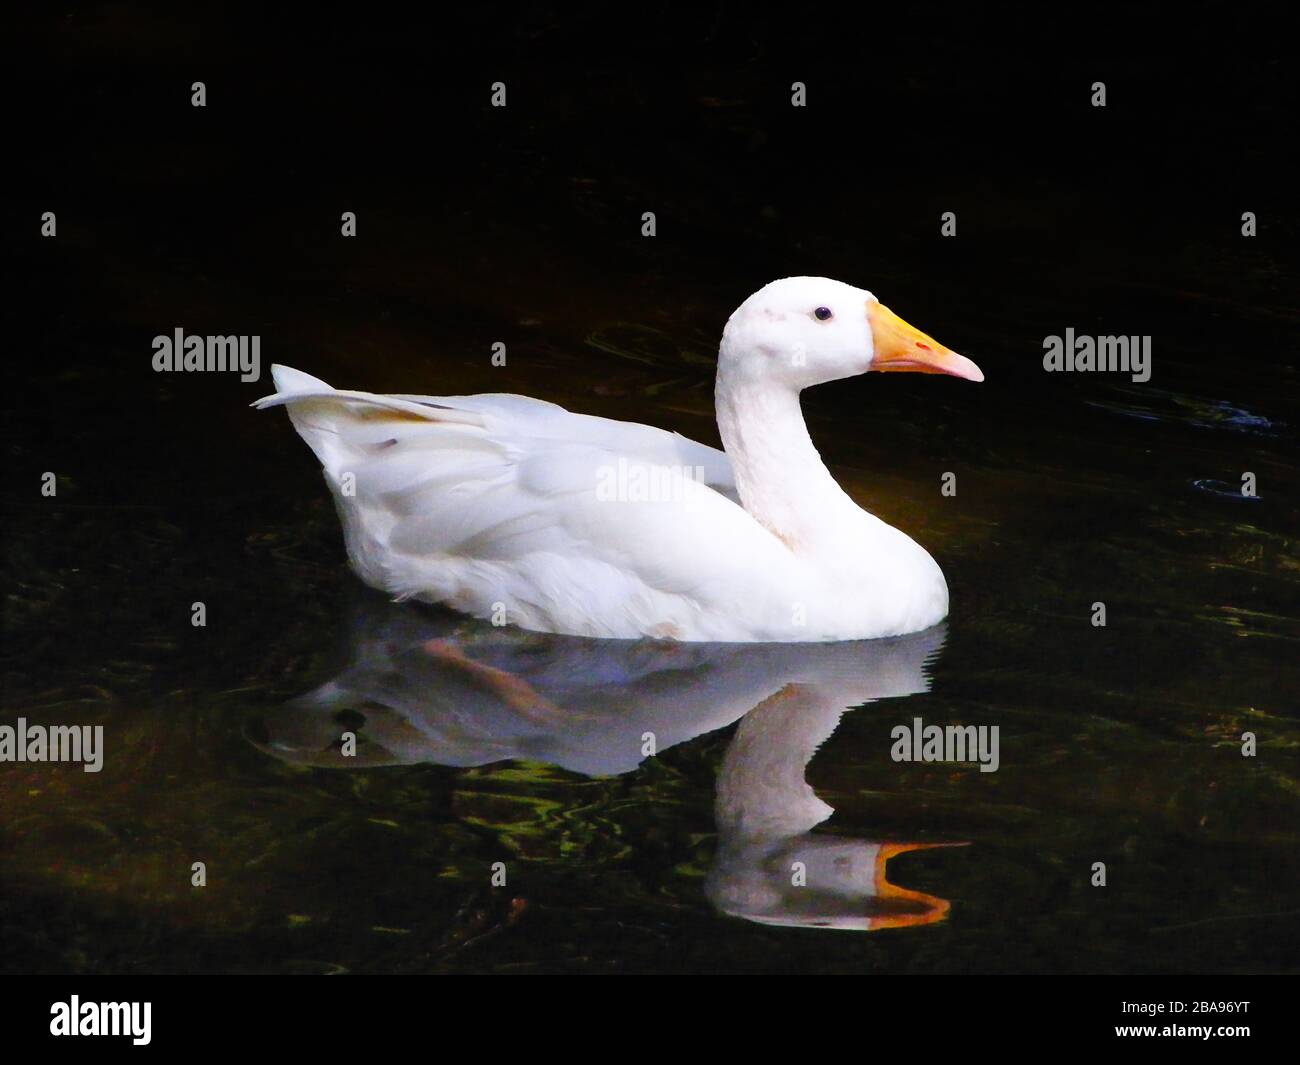 Duck in Pond | Zoo Delhi India Stock Photo